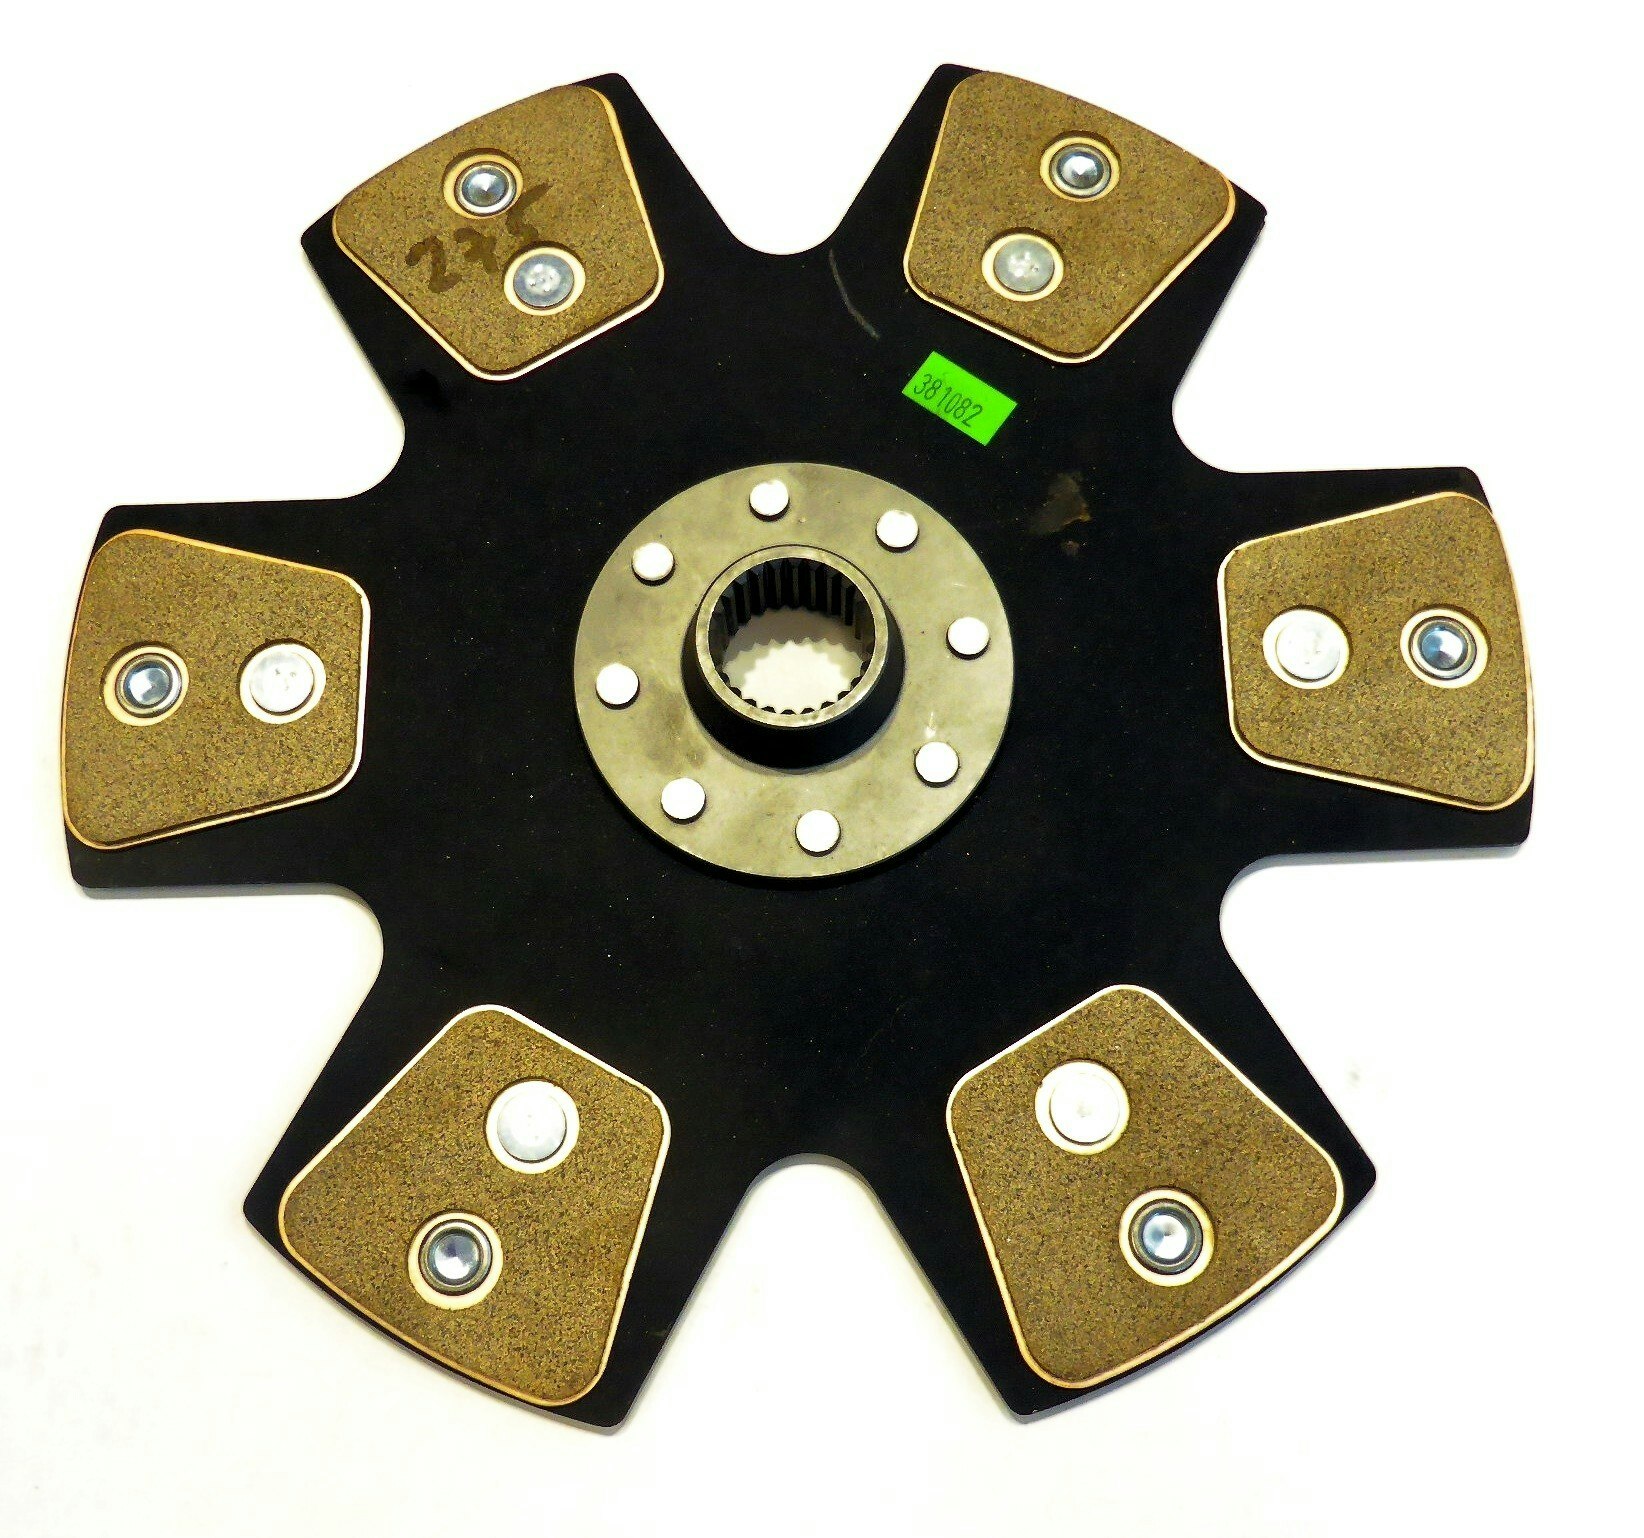 Tenaci 275 mm clutch disc with 6 pucks. GM 26 splines